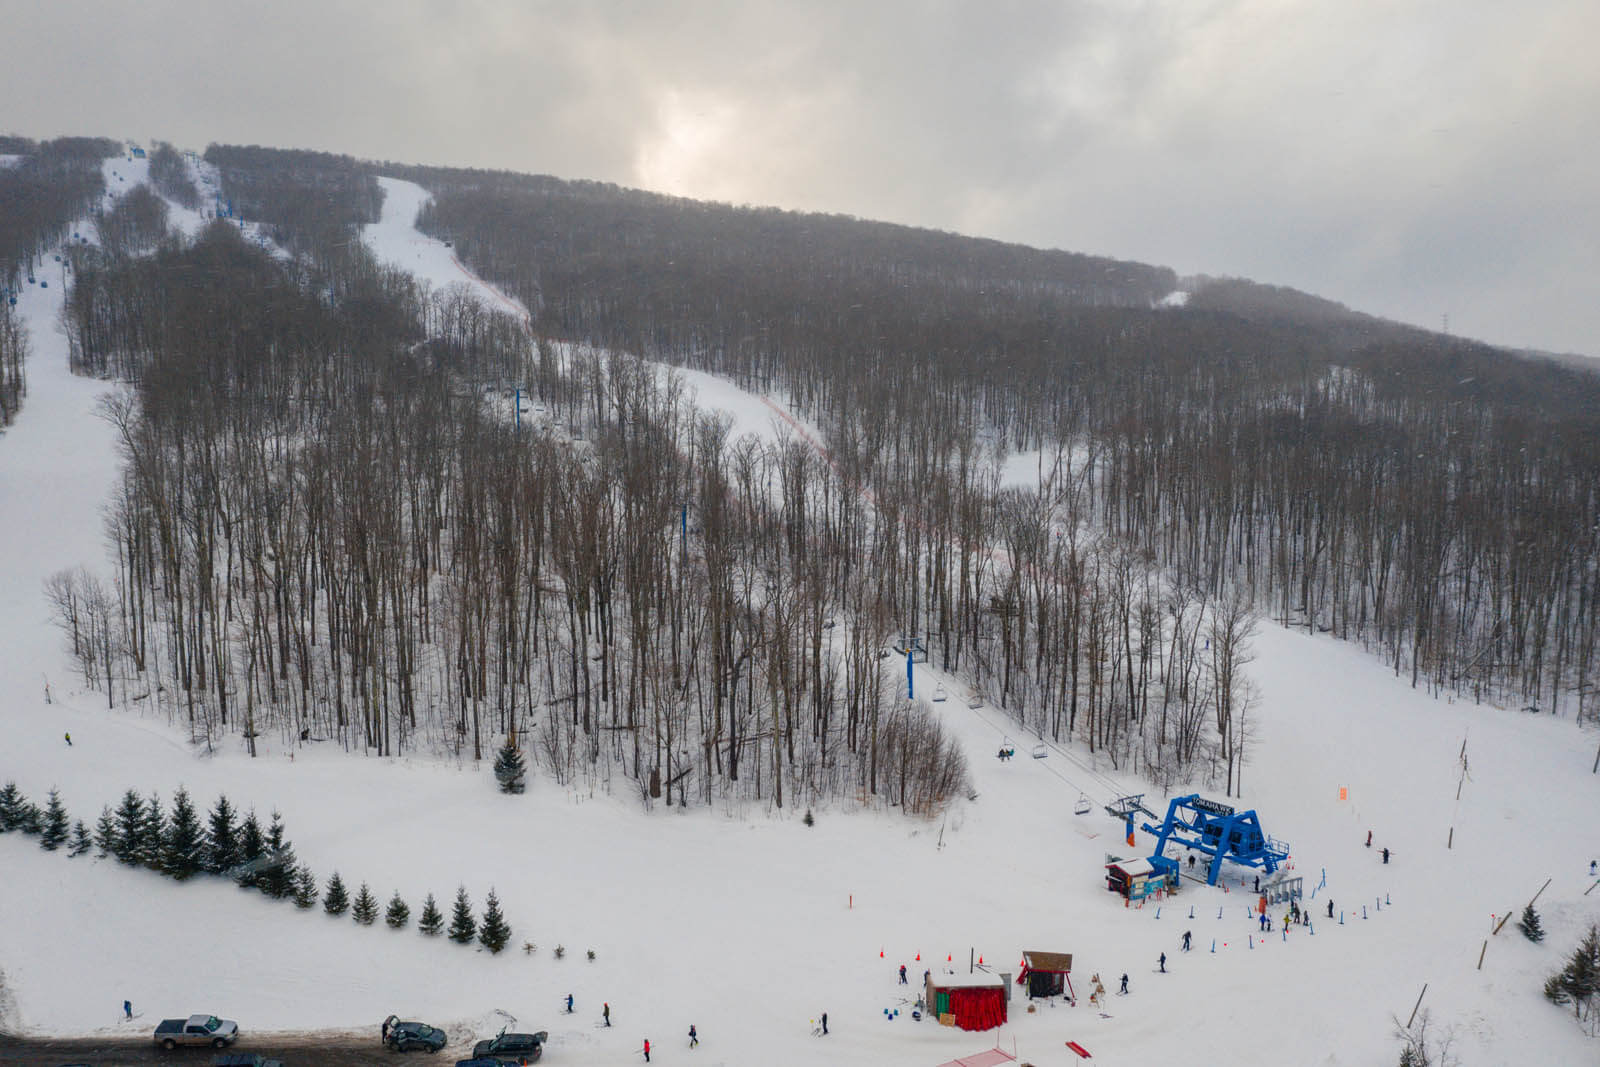 Aerial view of Belleayre Mountain Ski Resort in the Catskills New York